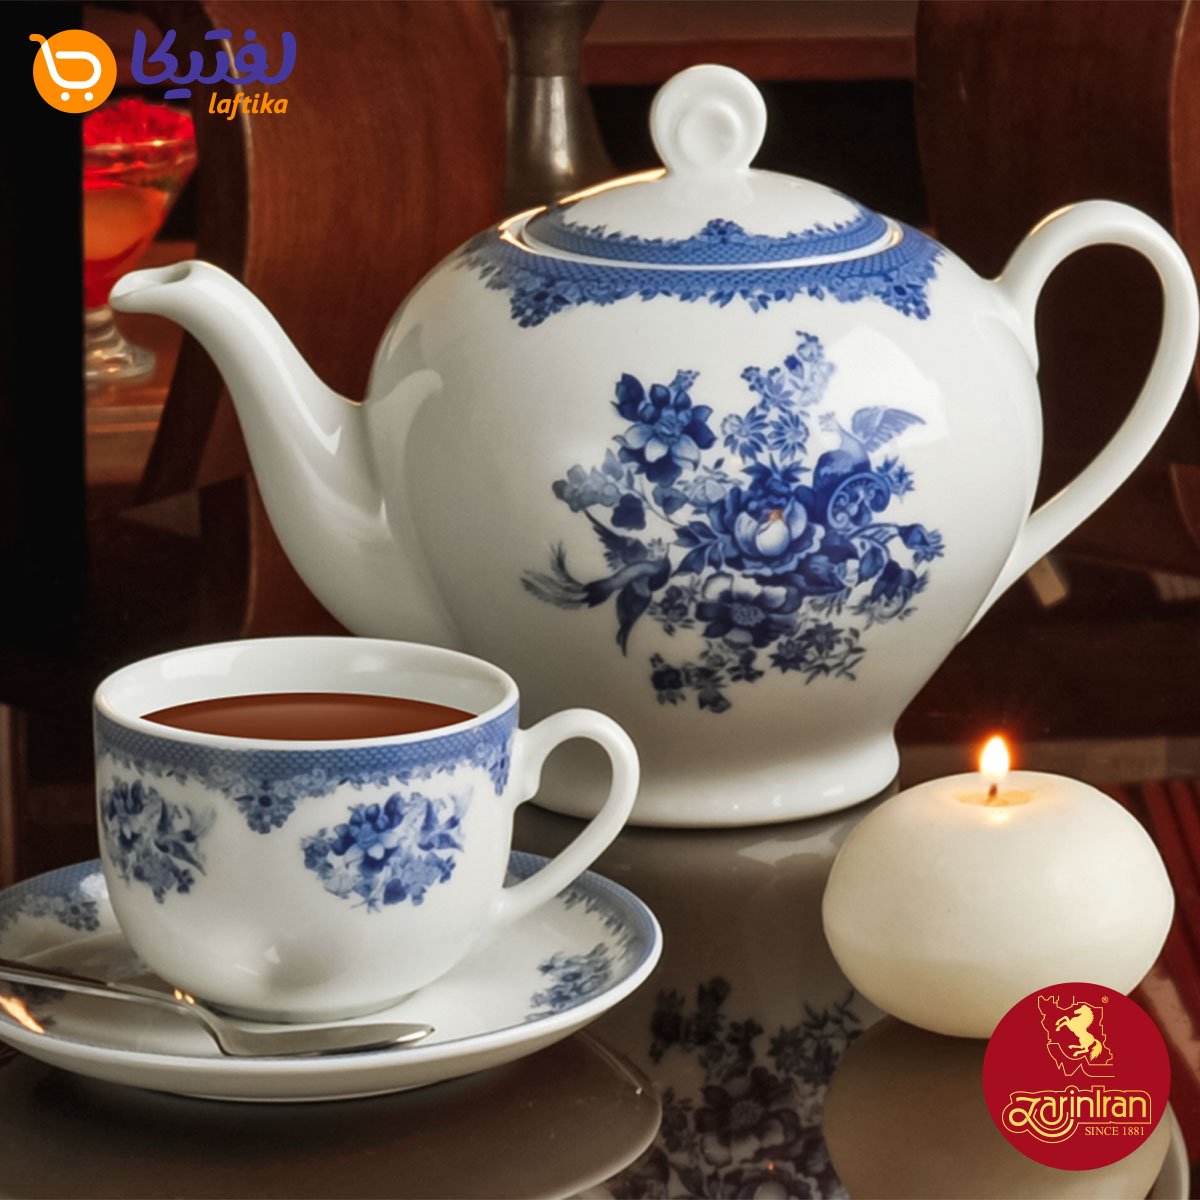 چینی زرین سرویس 17 پارچه چای خوری ایتالیا اف طرح فلورانس